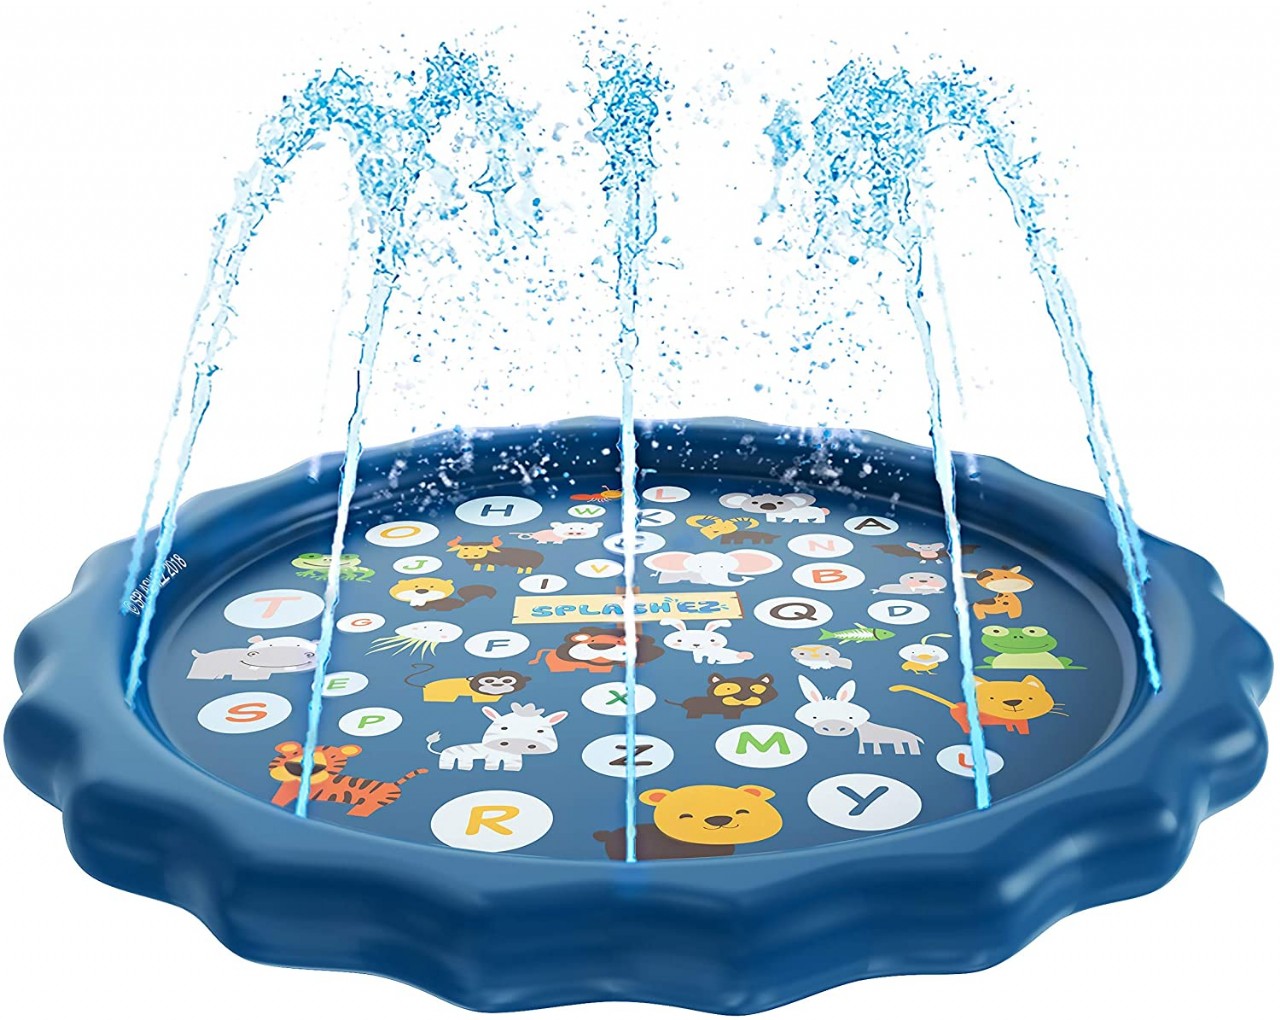 SplashEZ 3-in-1 Sprinkler for Kids, Splash Pad, and Wading Pool for Learning – Children’s Sprinkler